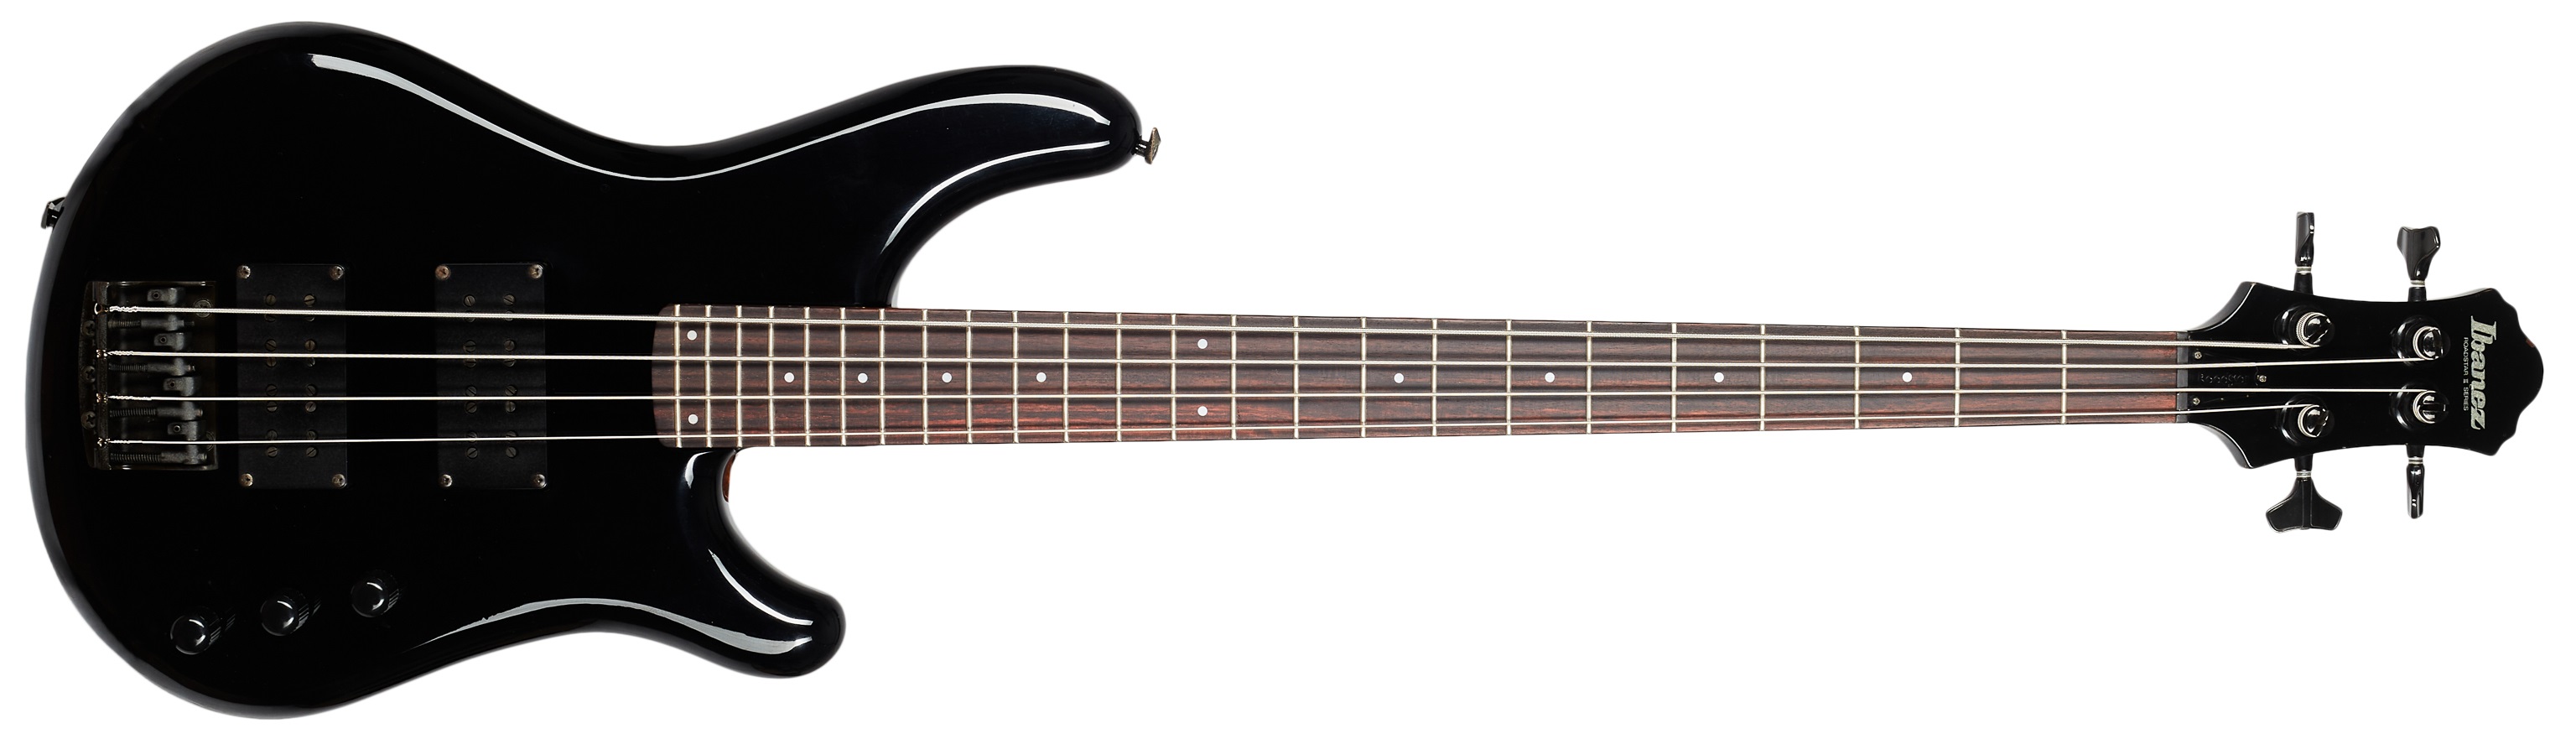 Ibanez 1984 Roadstar II Bass RB850 BK